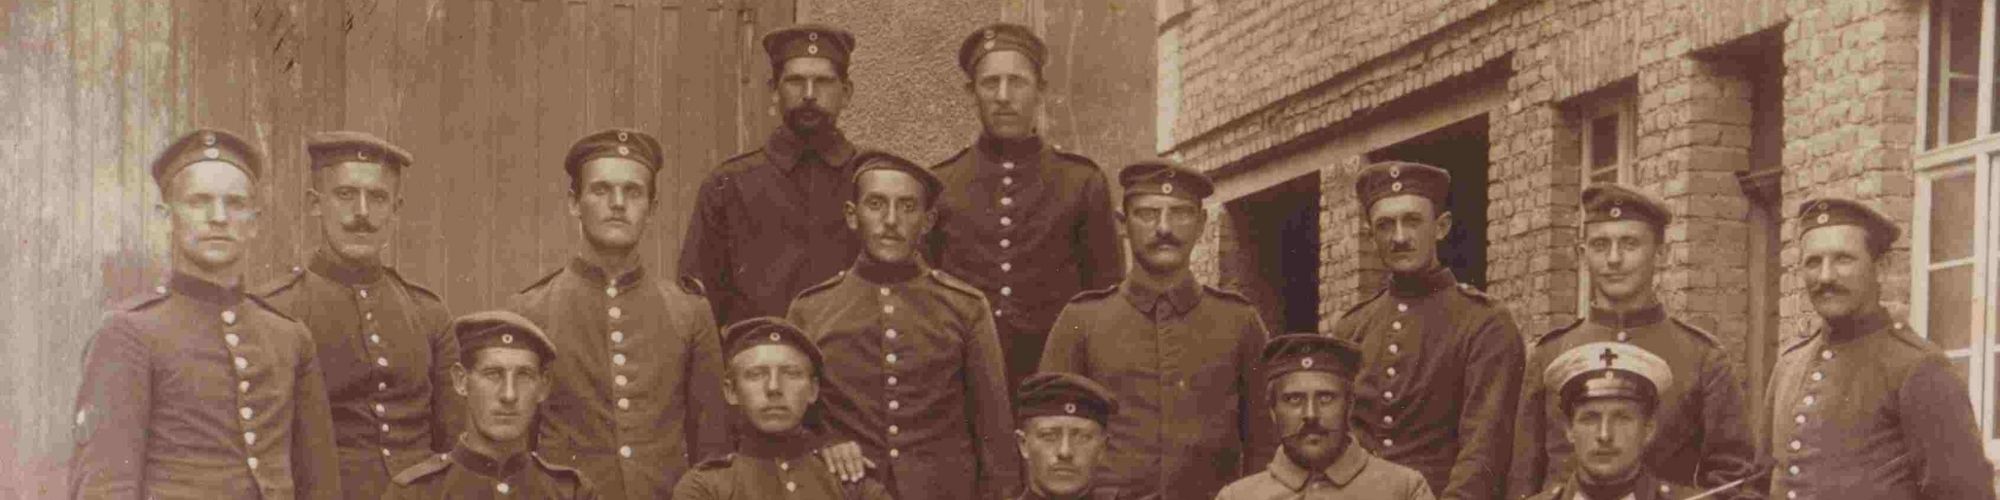 Groupes de soldats. Malmundarium, 1914-1918